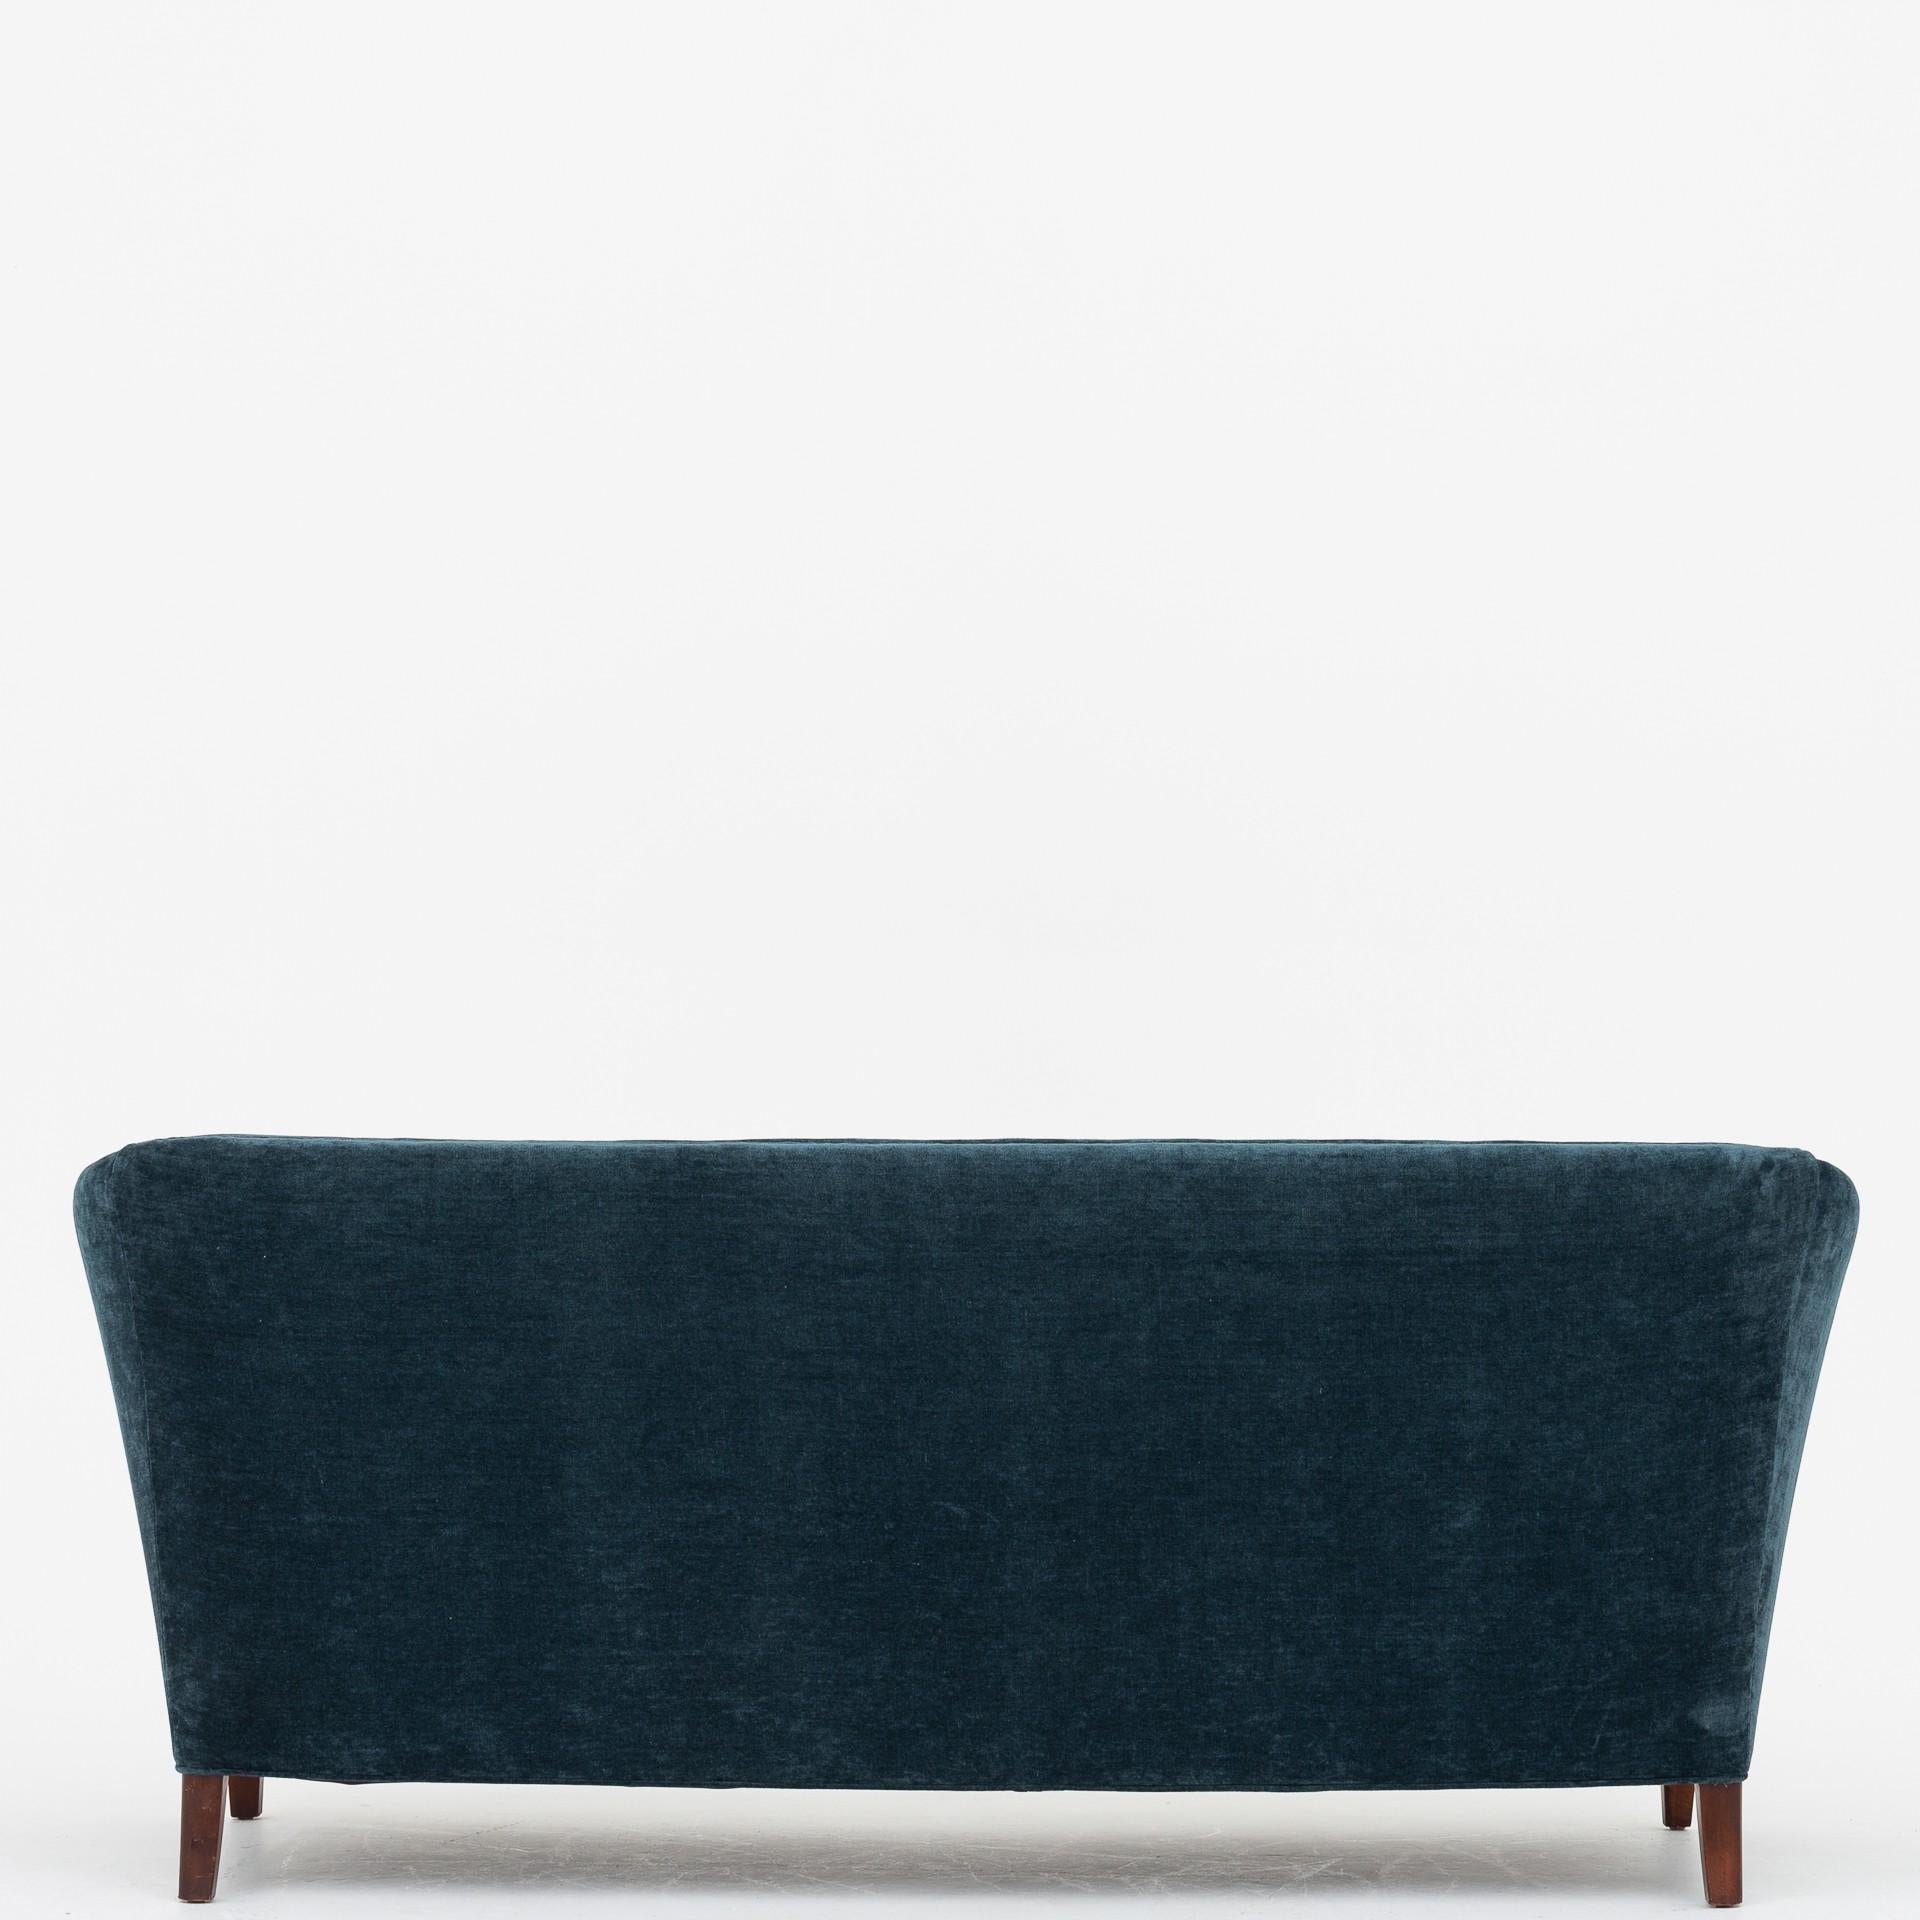 3-seat sofa in new fabric by Dedar Milano (Belsuede Ottanio).